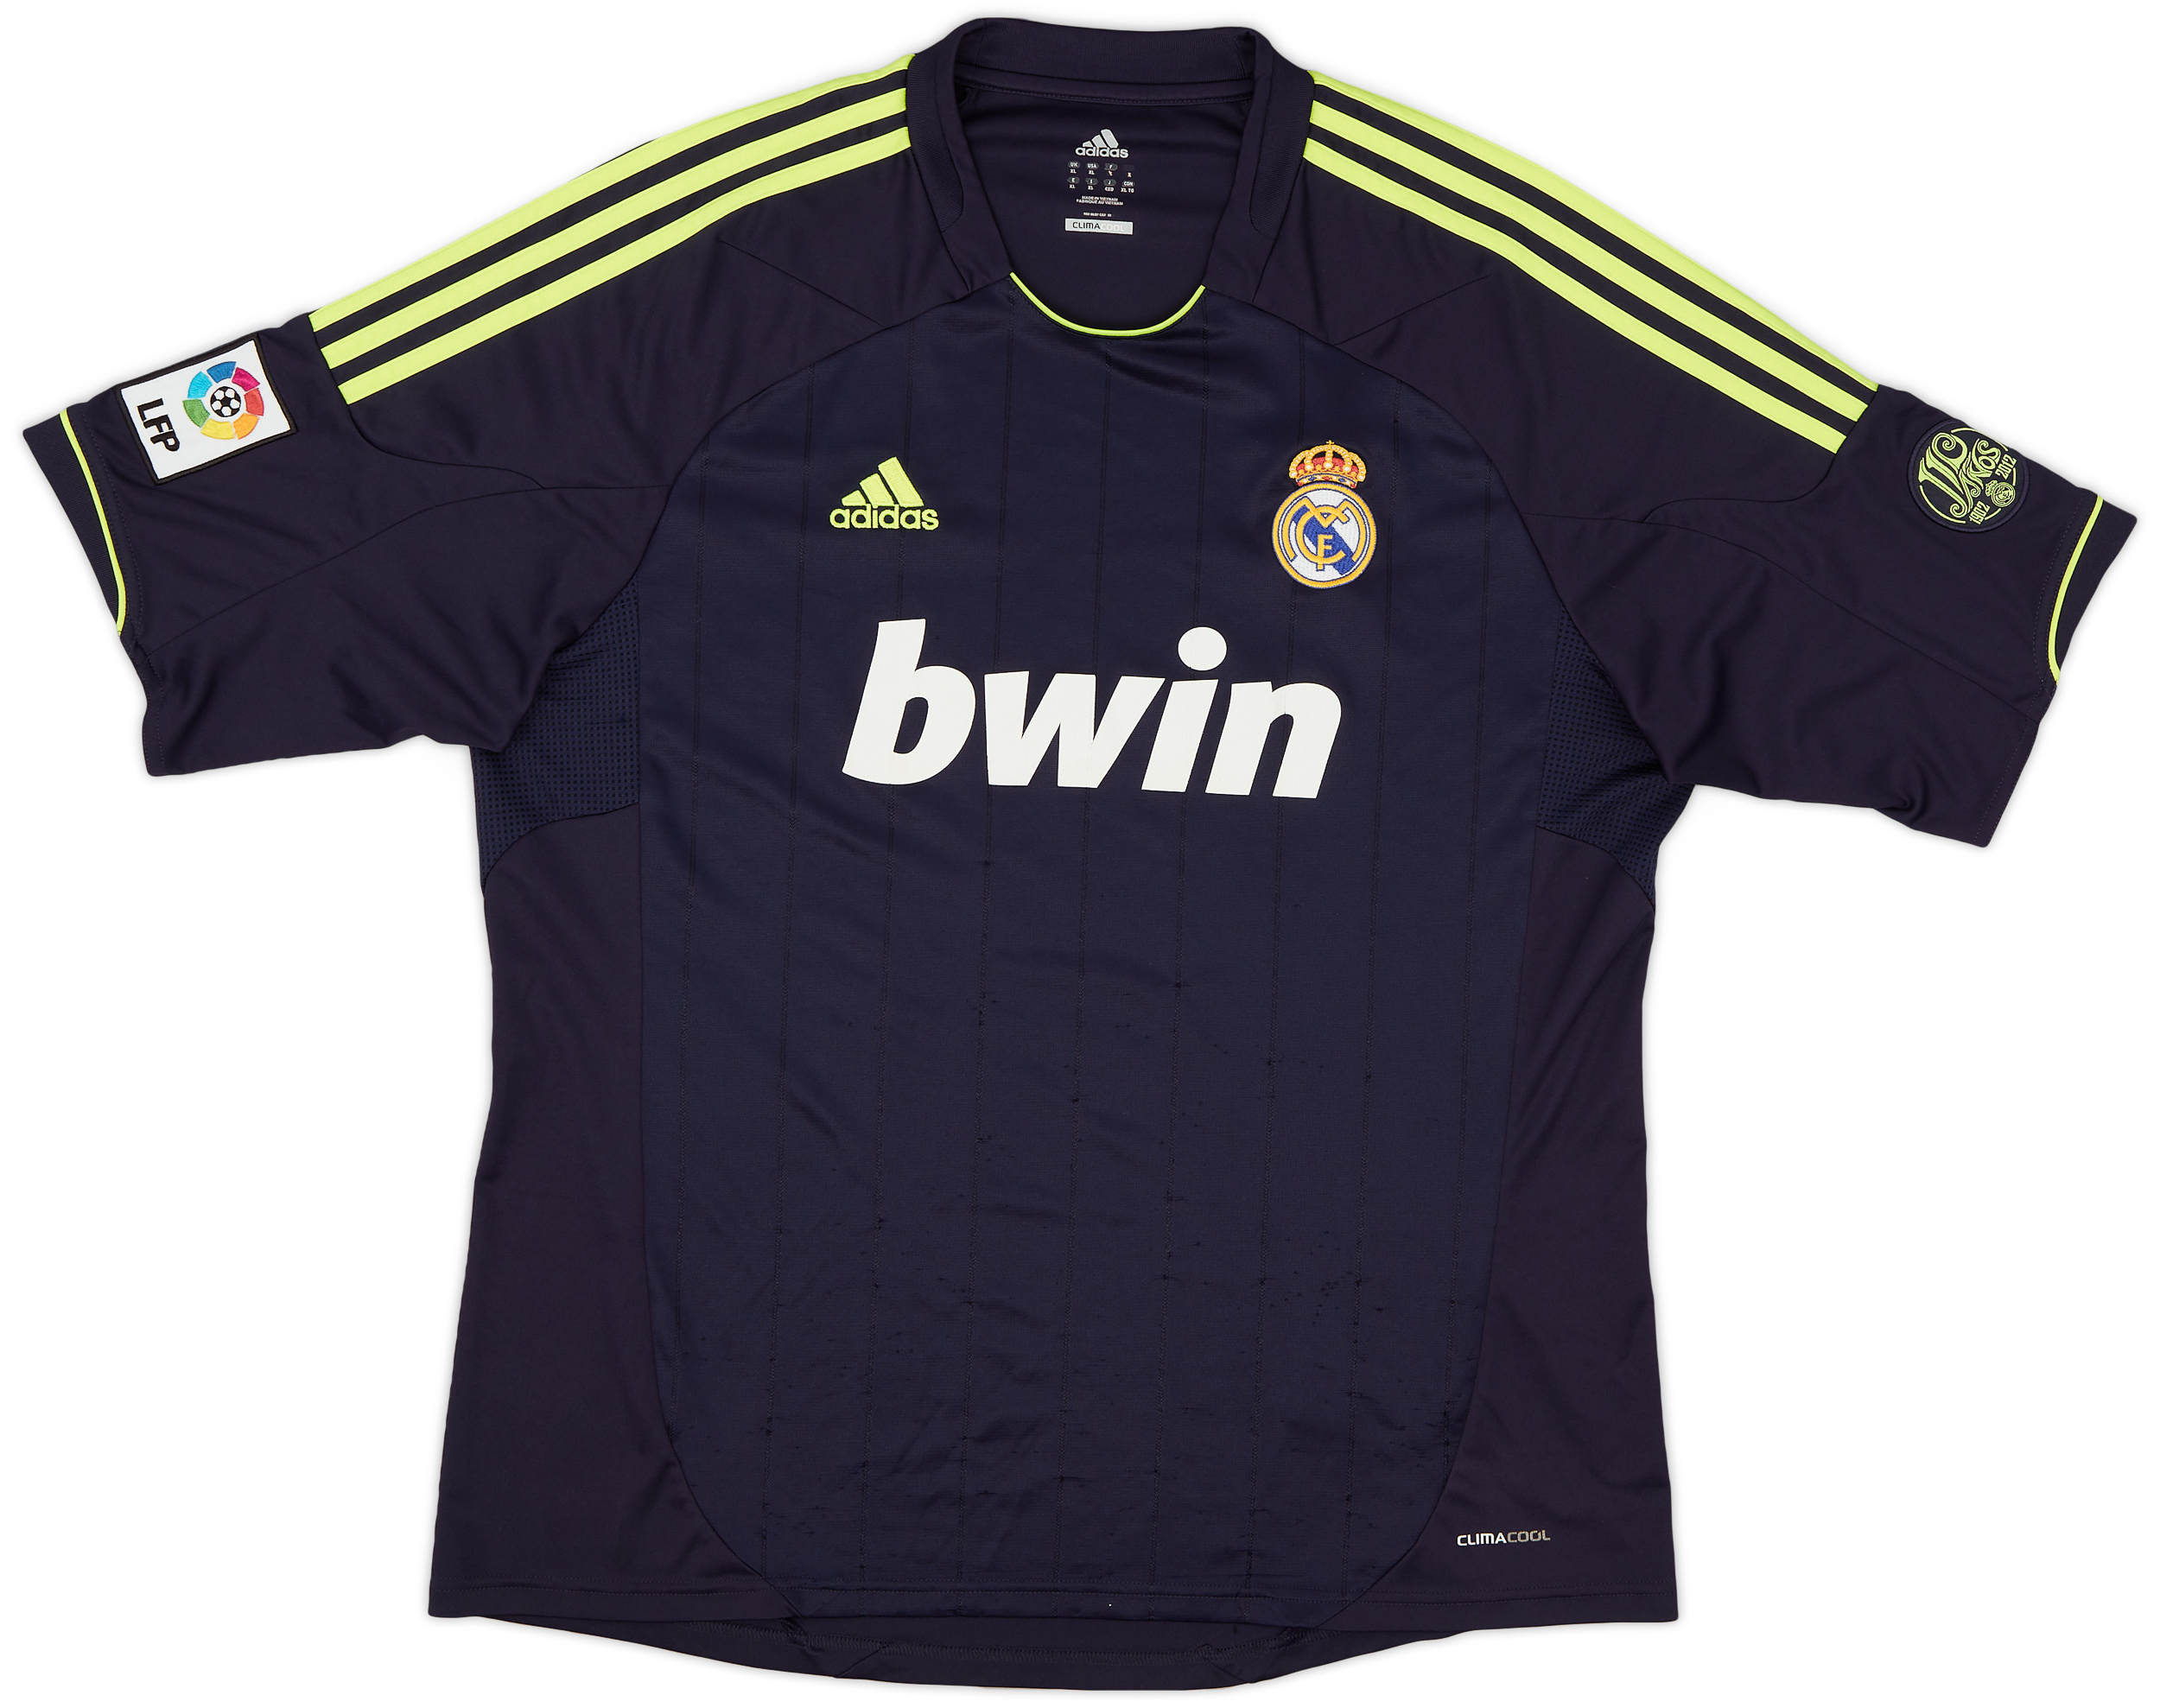 2012-13 Real Madrid Away Shirt - 7/10 - ()